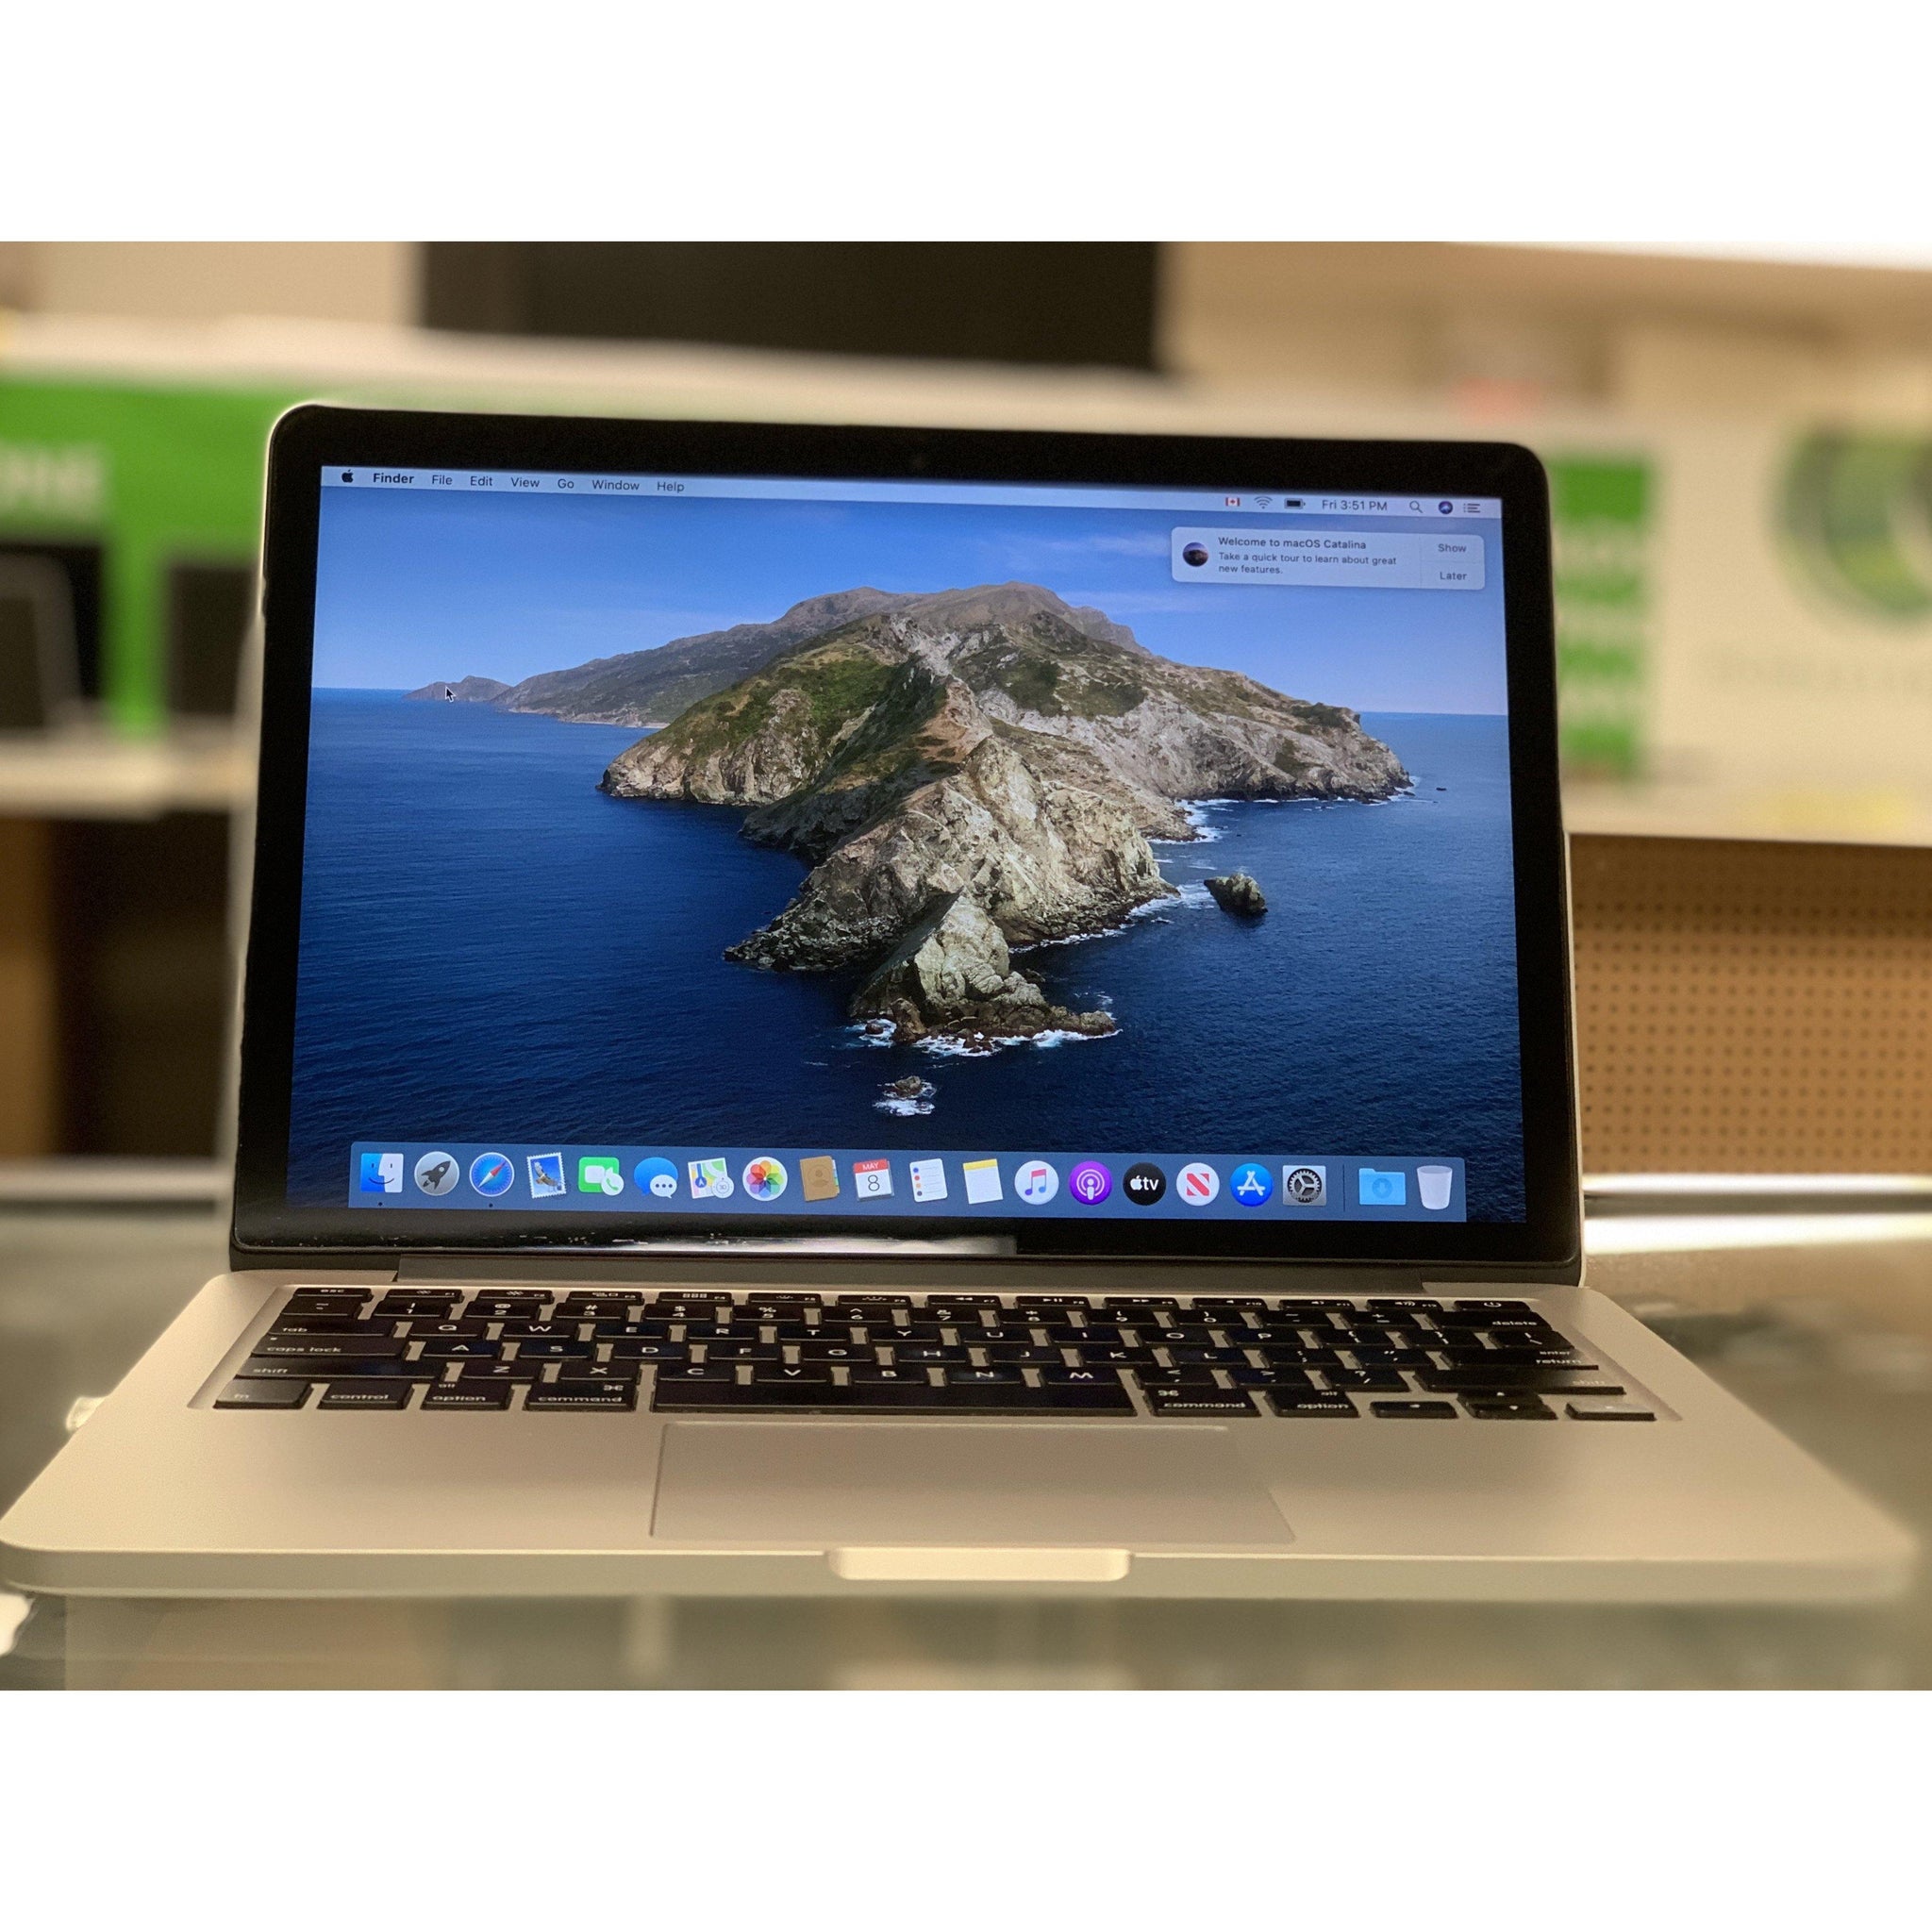 SALE :: MacBook Pro (Retina, 13-inch, Mid 2014) – PCMaster Pro